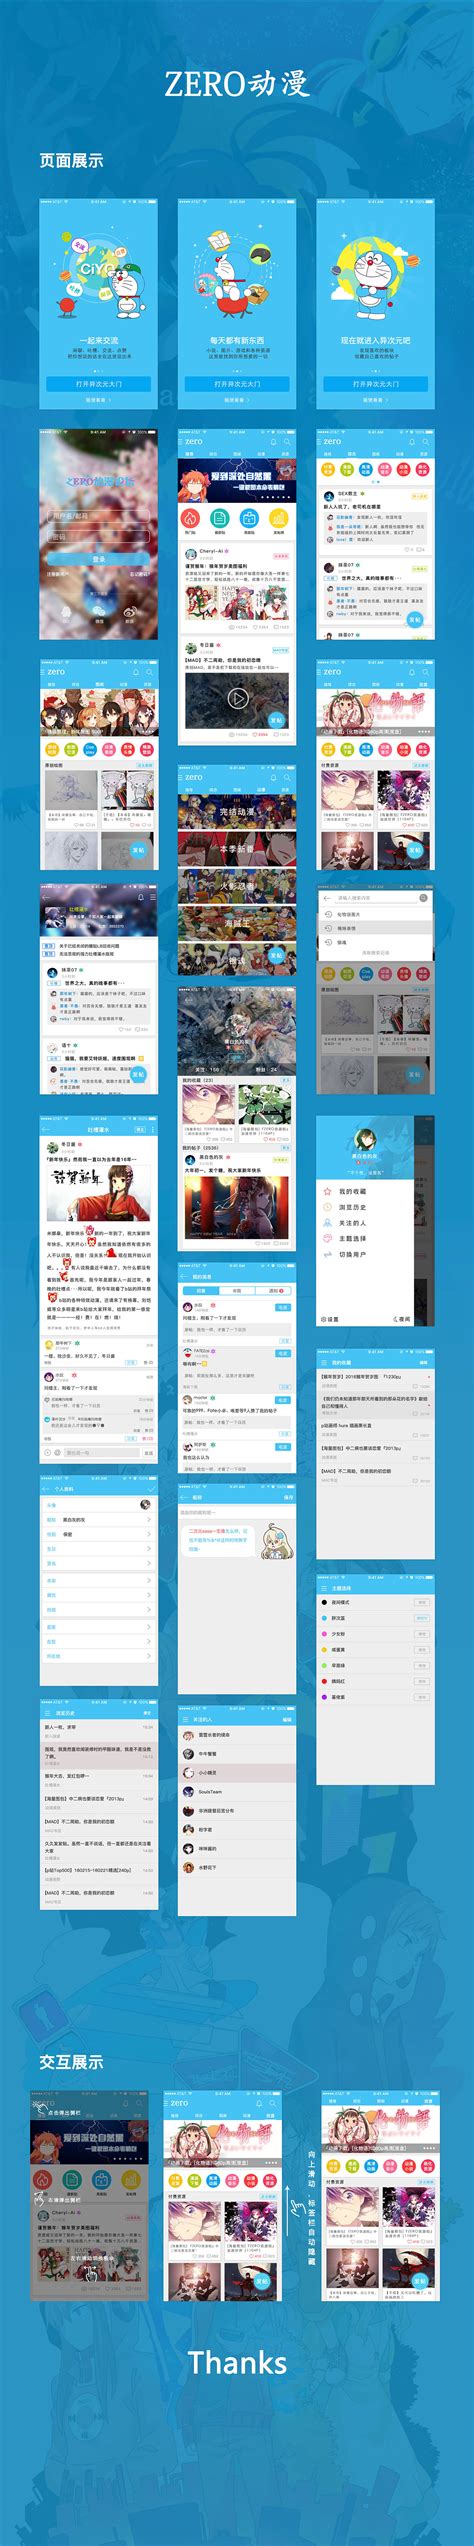 947 Zero Two Iphone Wallpaper Live - MyWeb